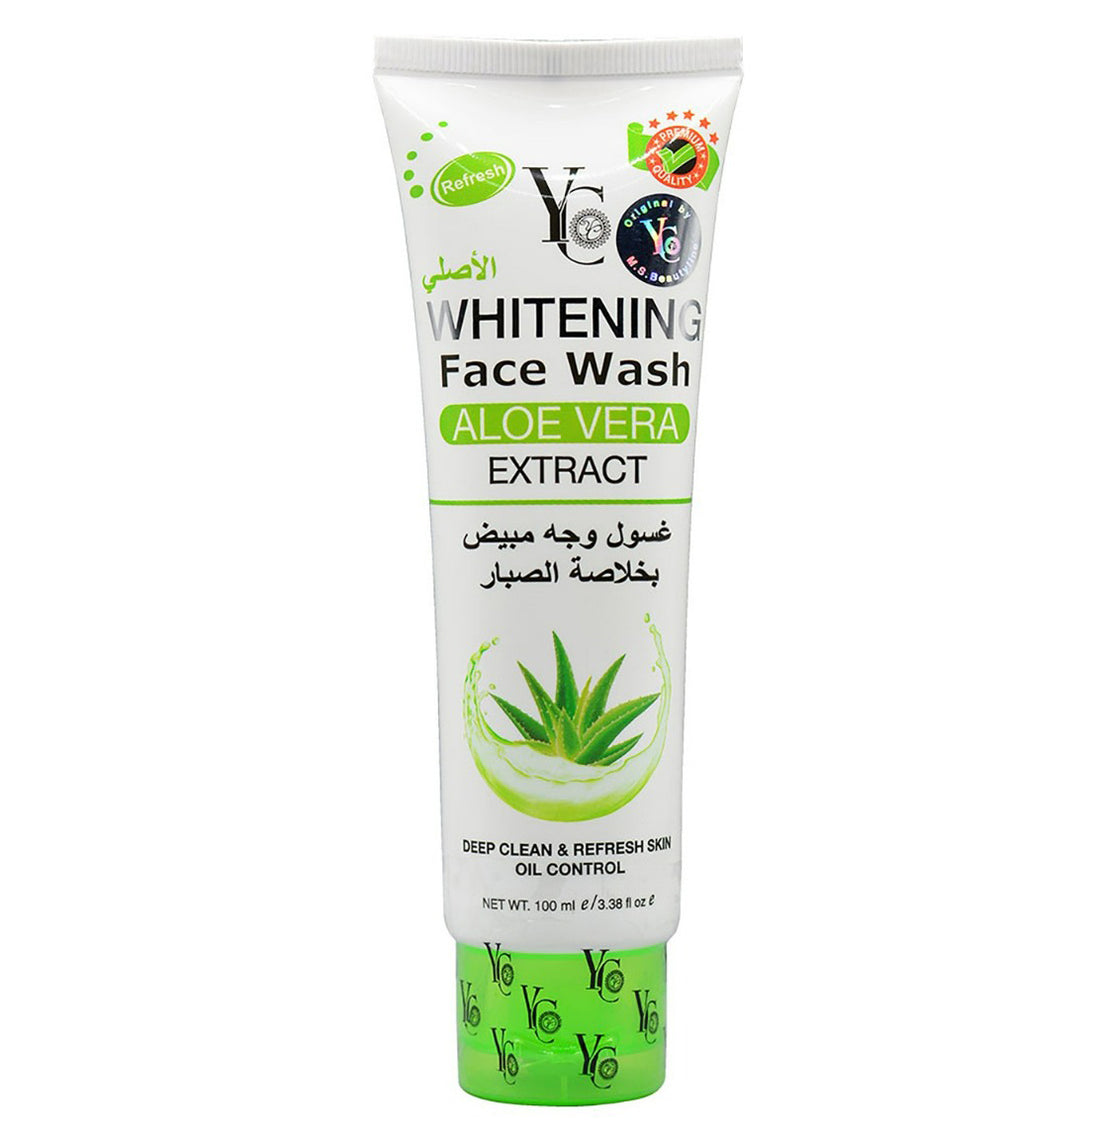 YC Whitening Aloe Vera Extract Acne Face Wash (100ml)